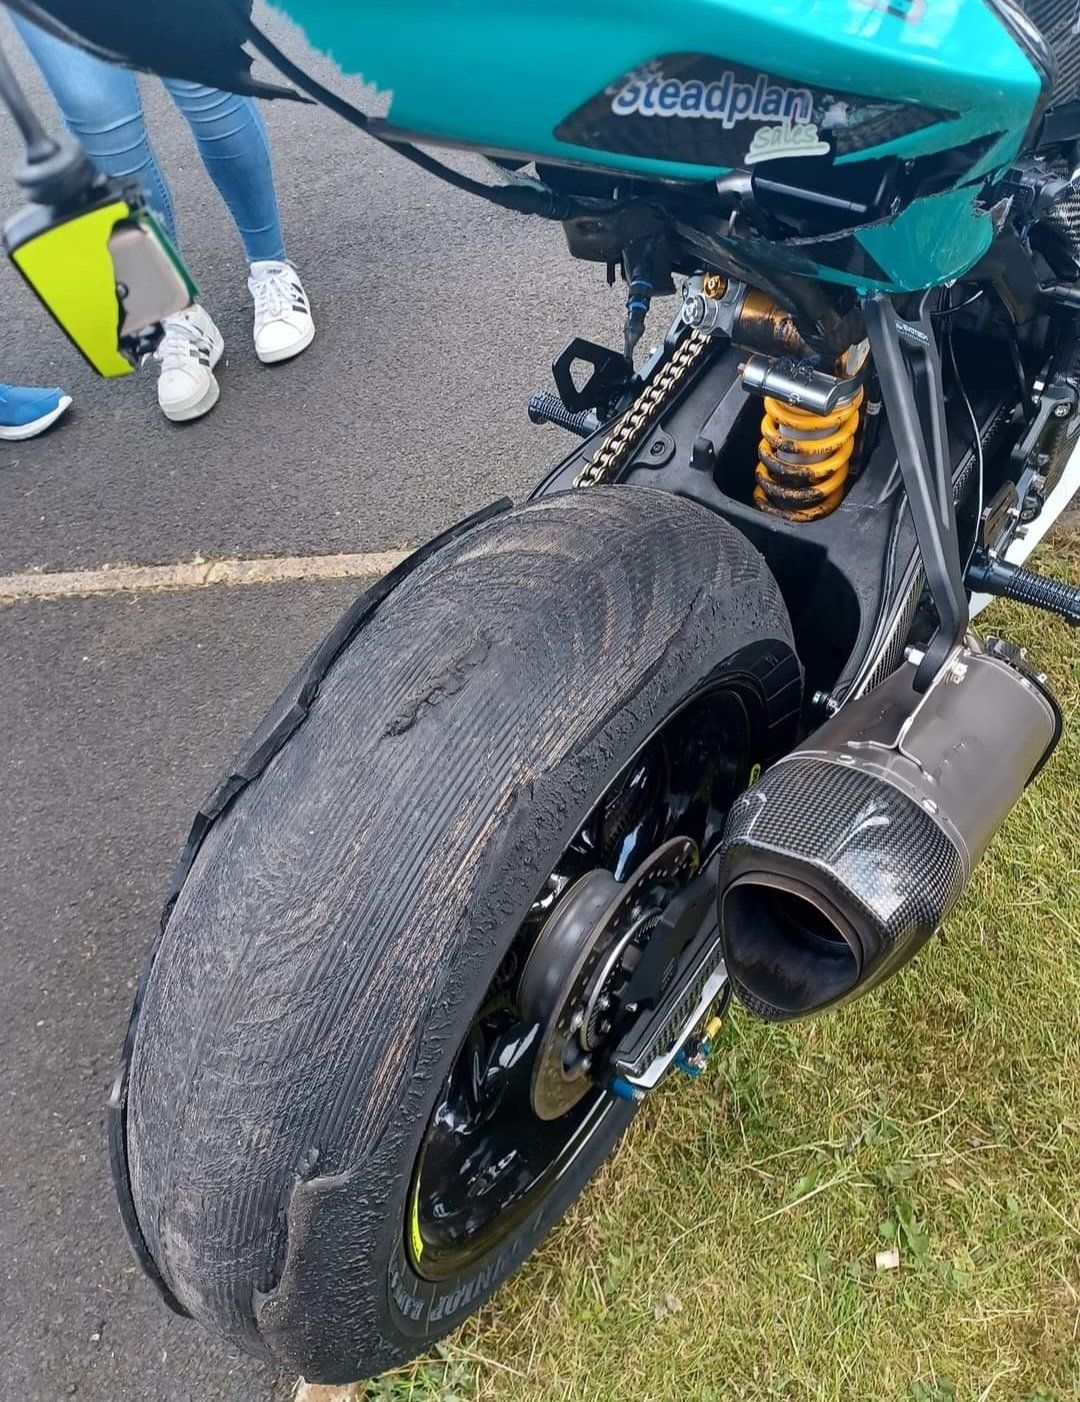 Rear Tire in Grass Explosion